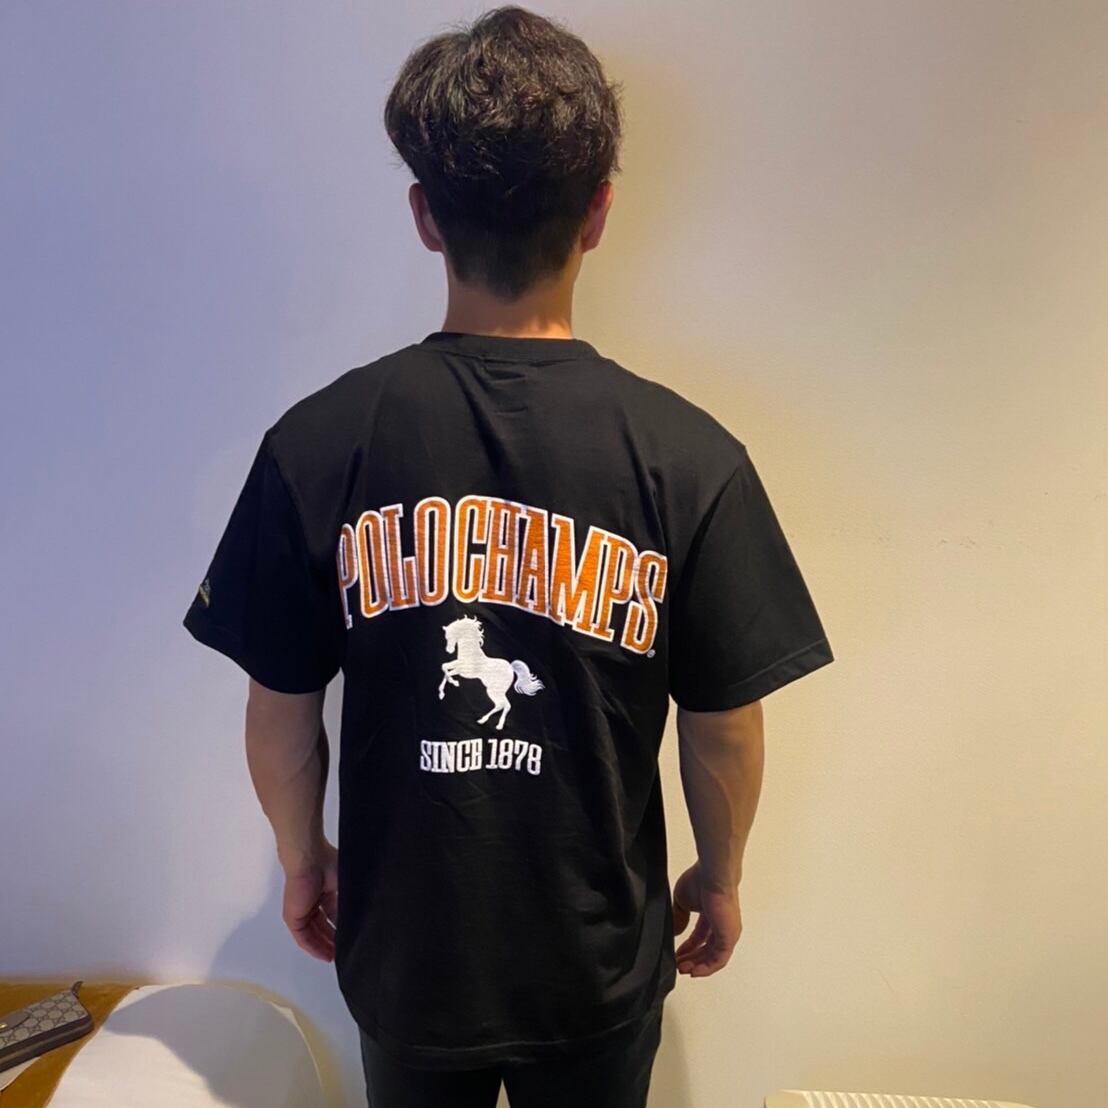 Coachella 2019 限定 CHILDISH GAMBINO Tシャツ